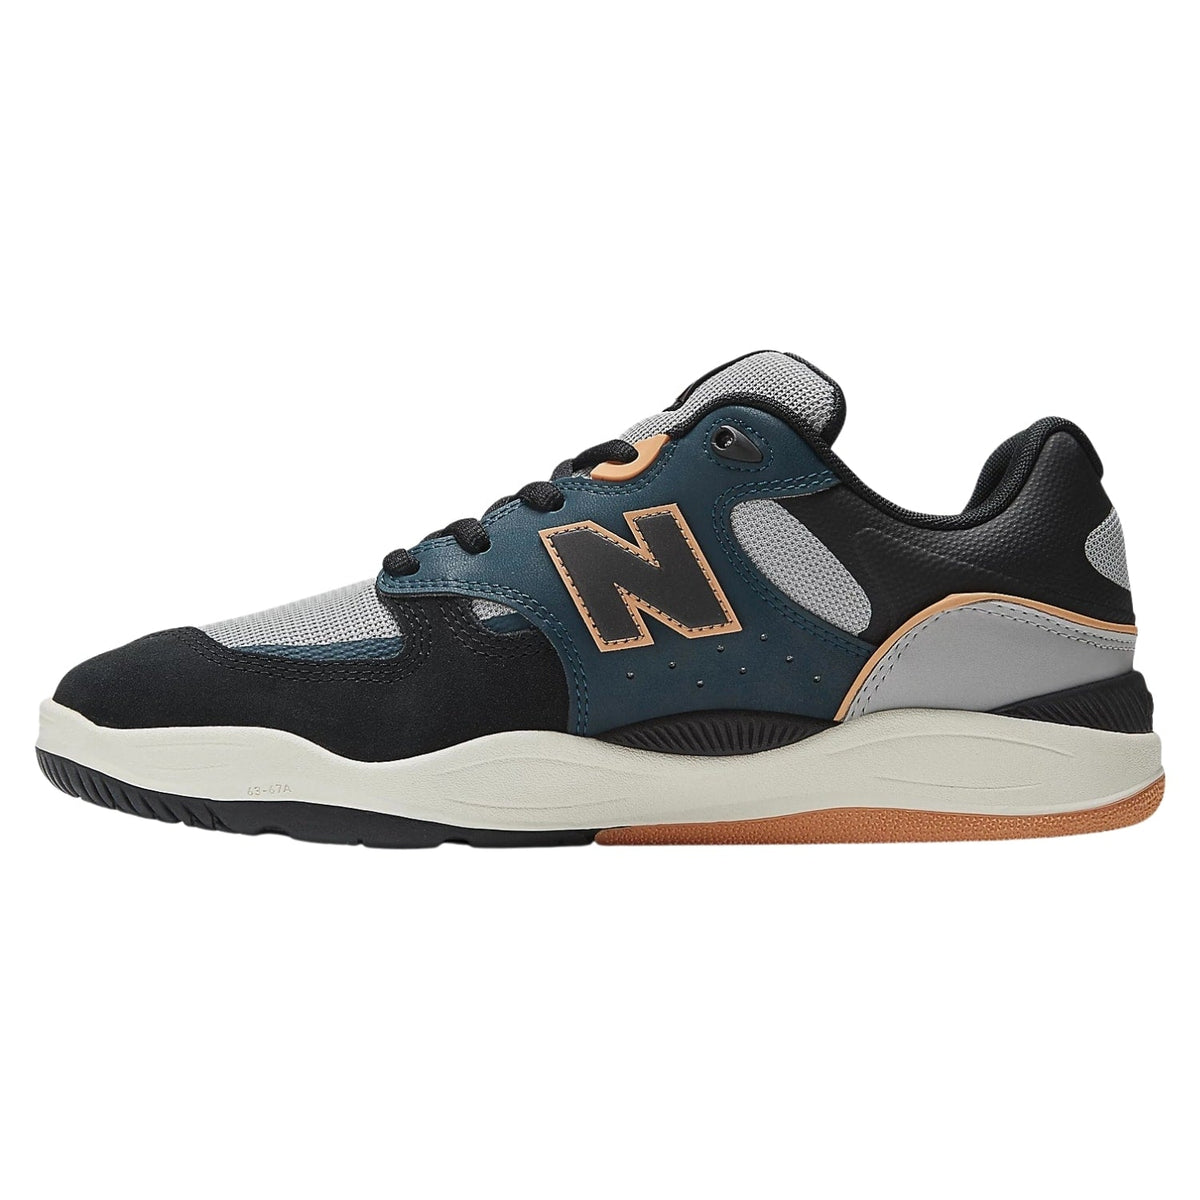 New Balance Numeric NM1010 Tiago Lemos Skate Shoes - Teal/Black